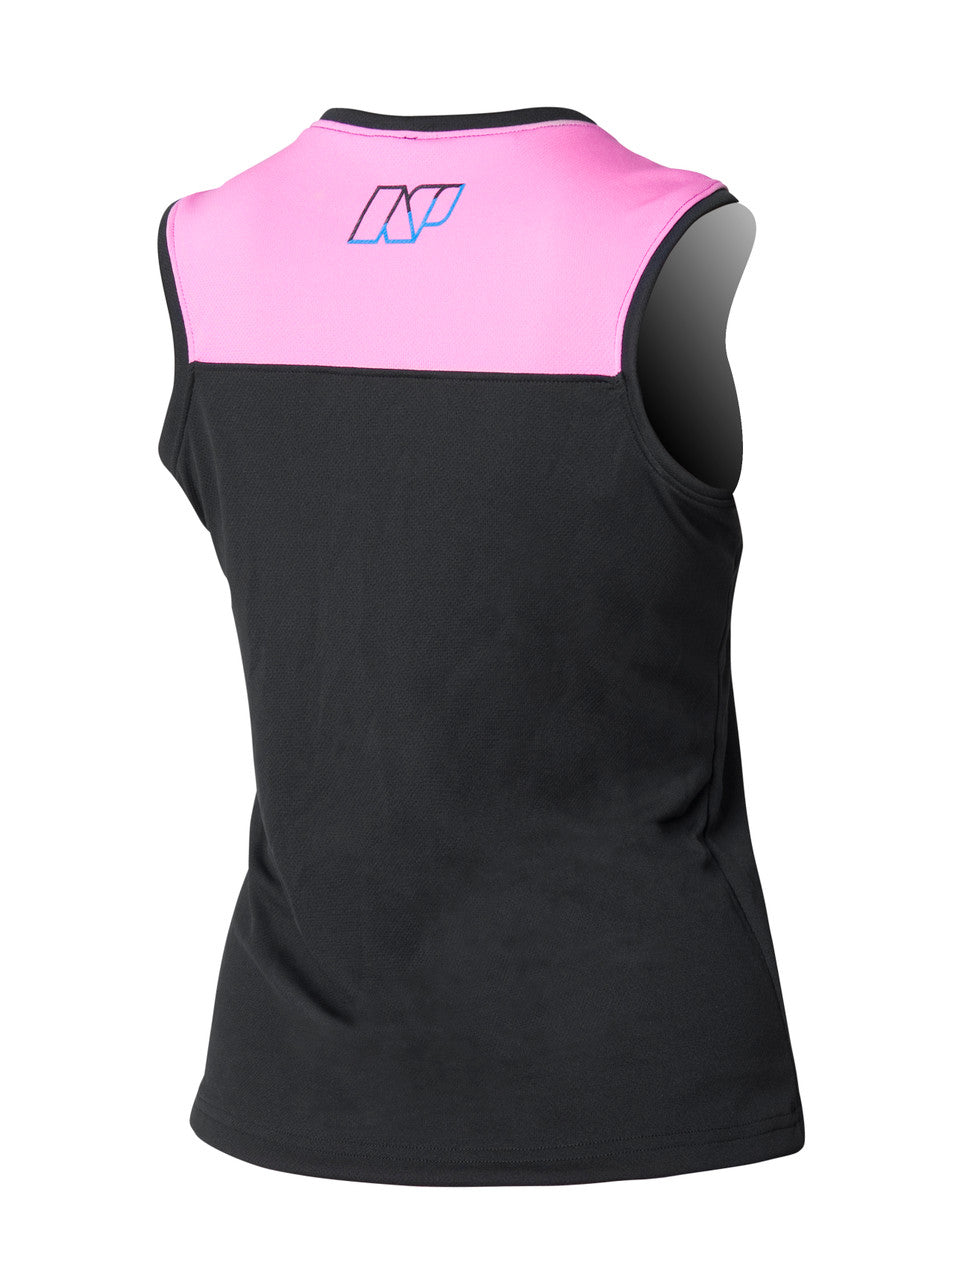 Neil Pryde / NP Tank Top Soft Racerback shirt 80% off black